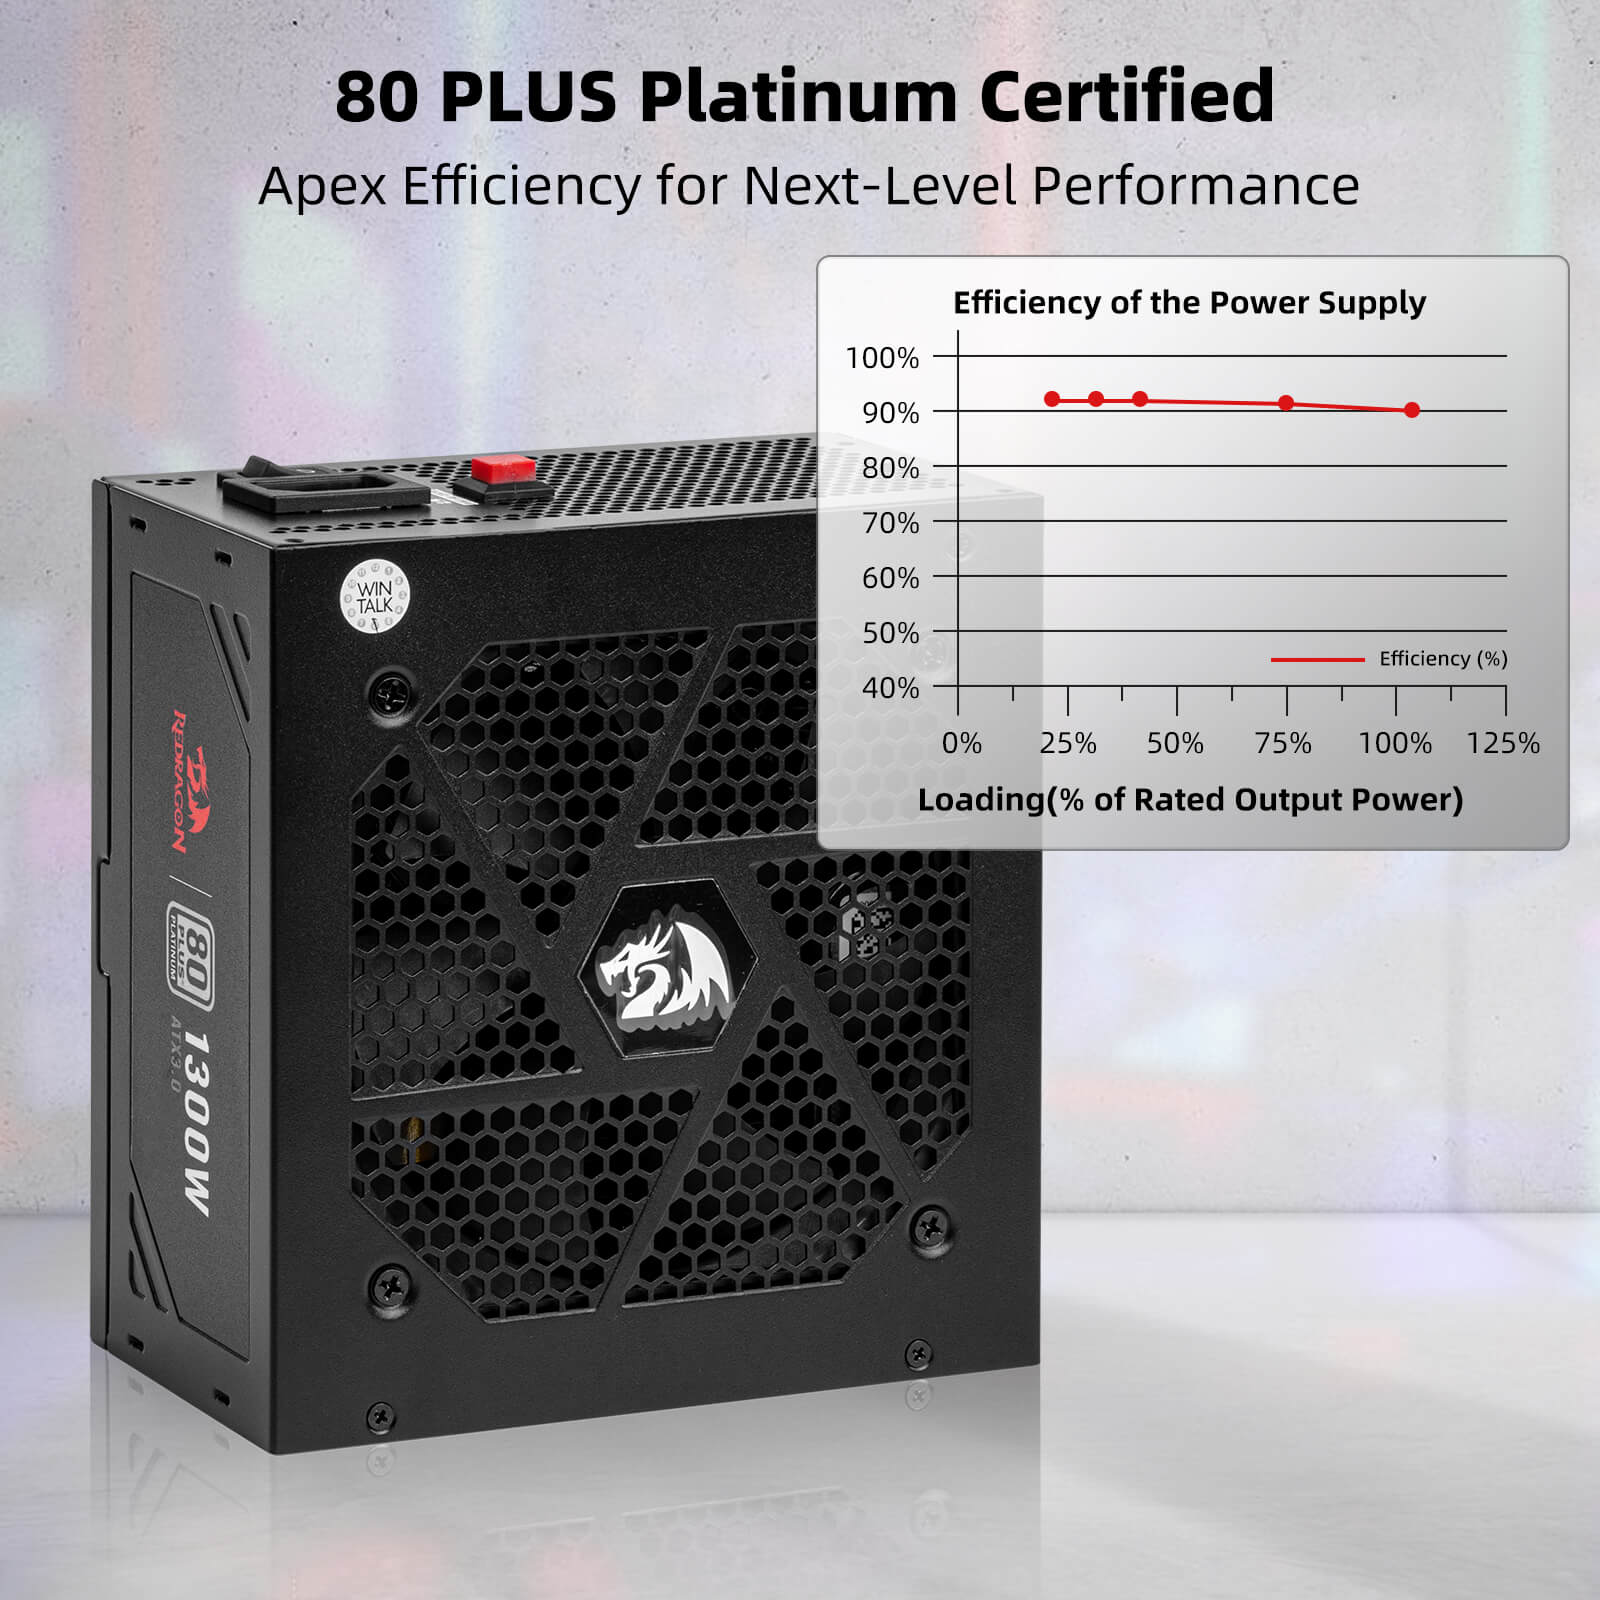 PSU018 80+ Platinum 1300 Watt ATX 3.0 Fully Modular Power Supply